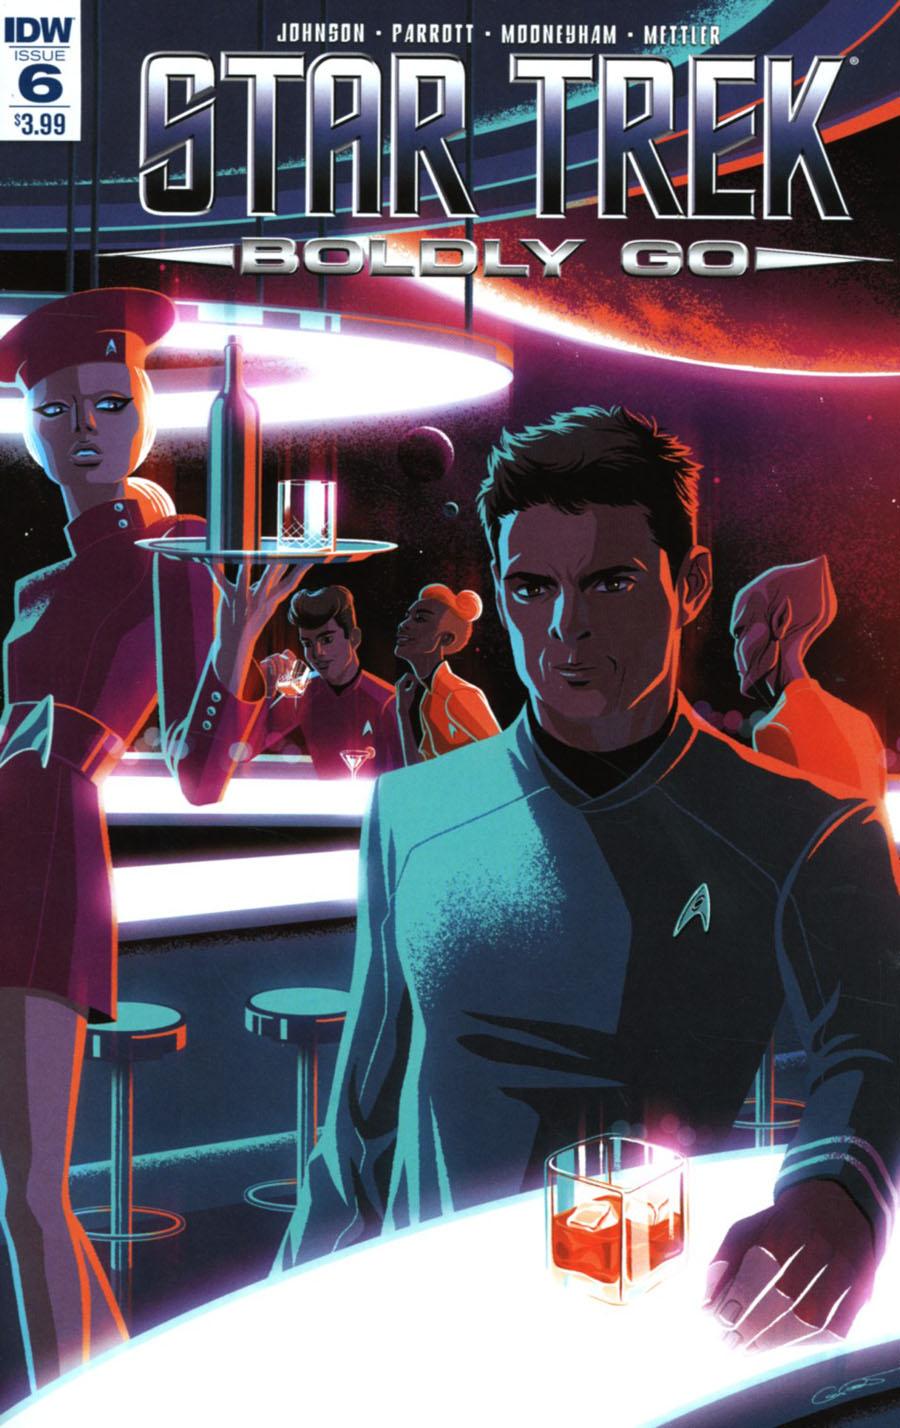 Star Trek Boldly Go Vol. 1 #6